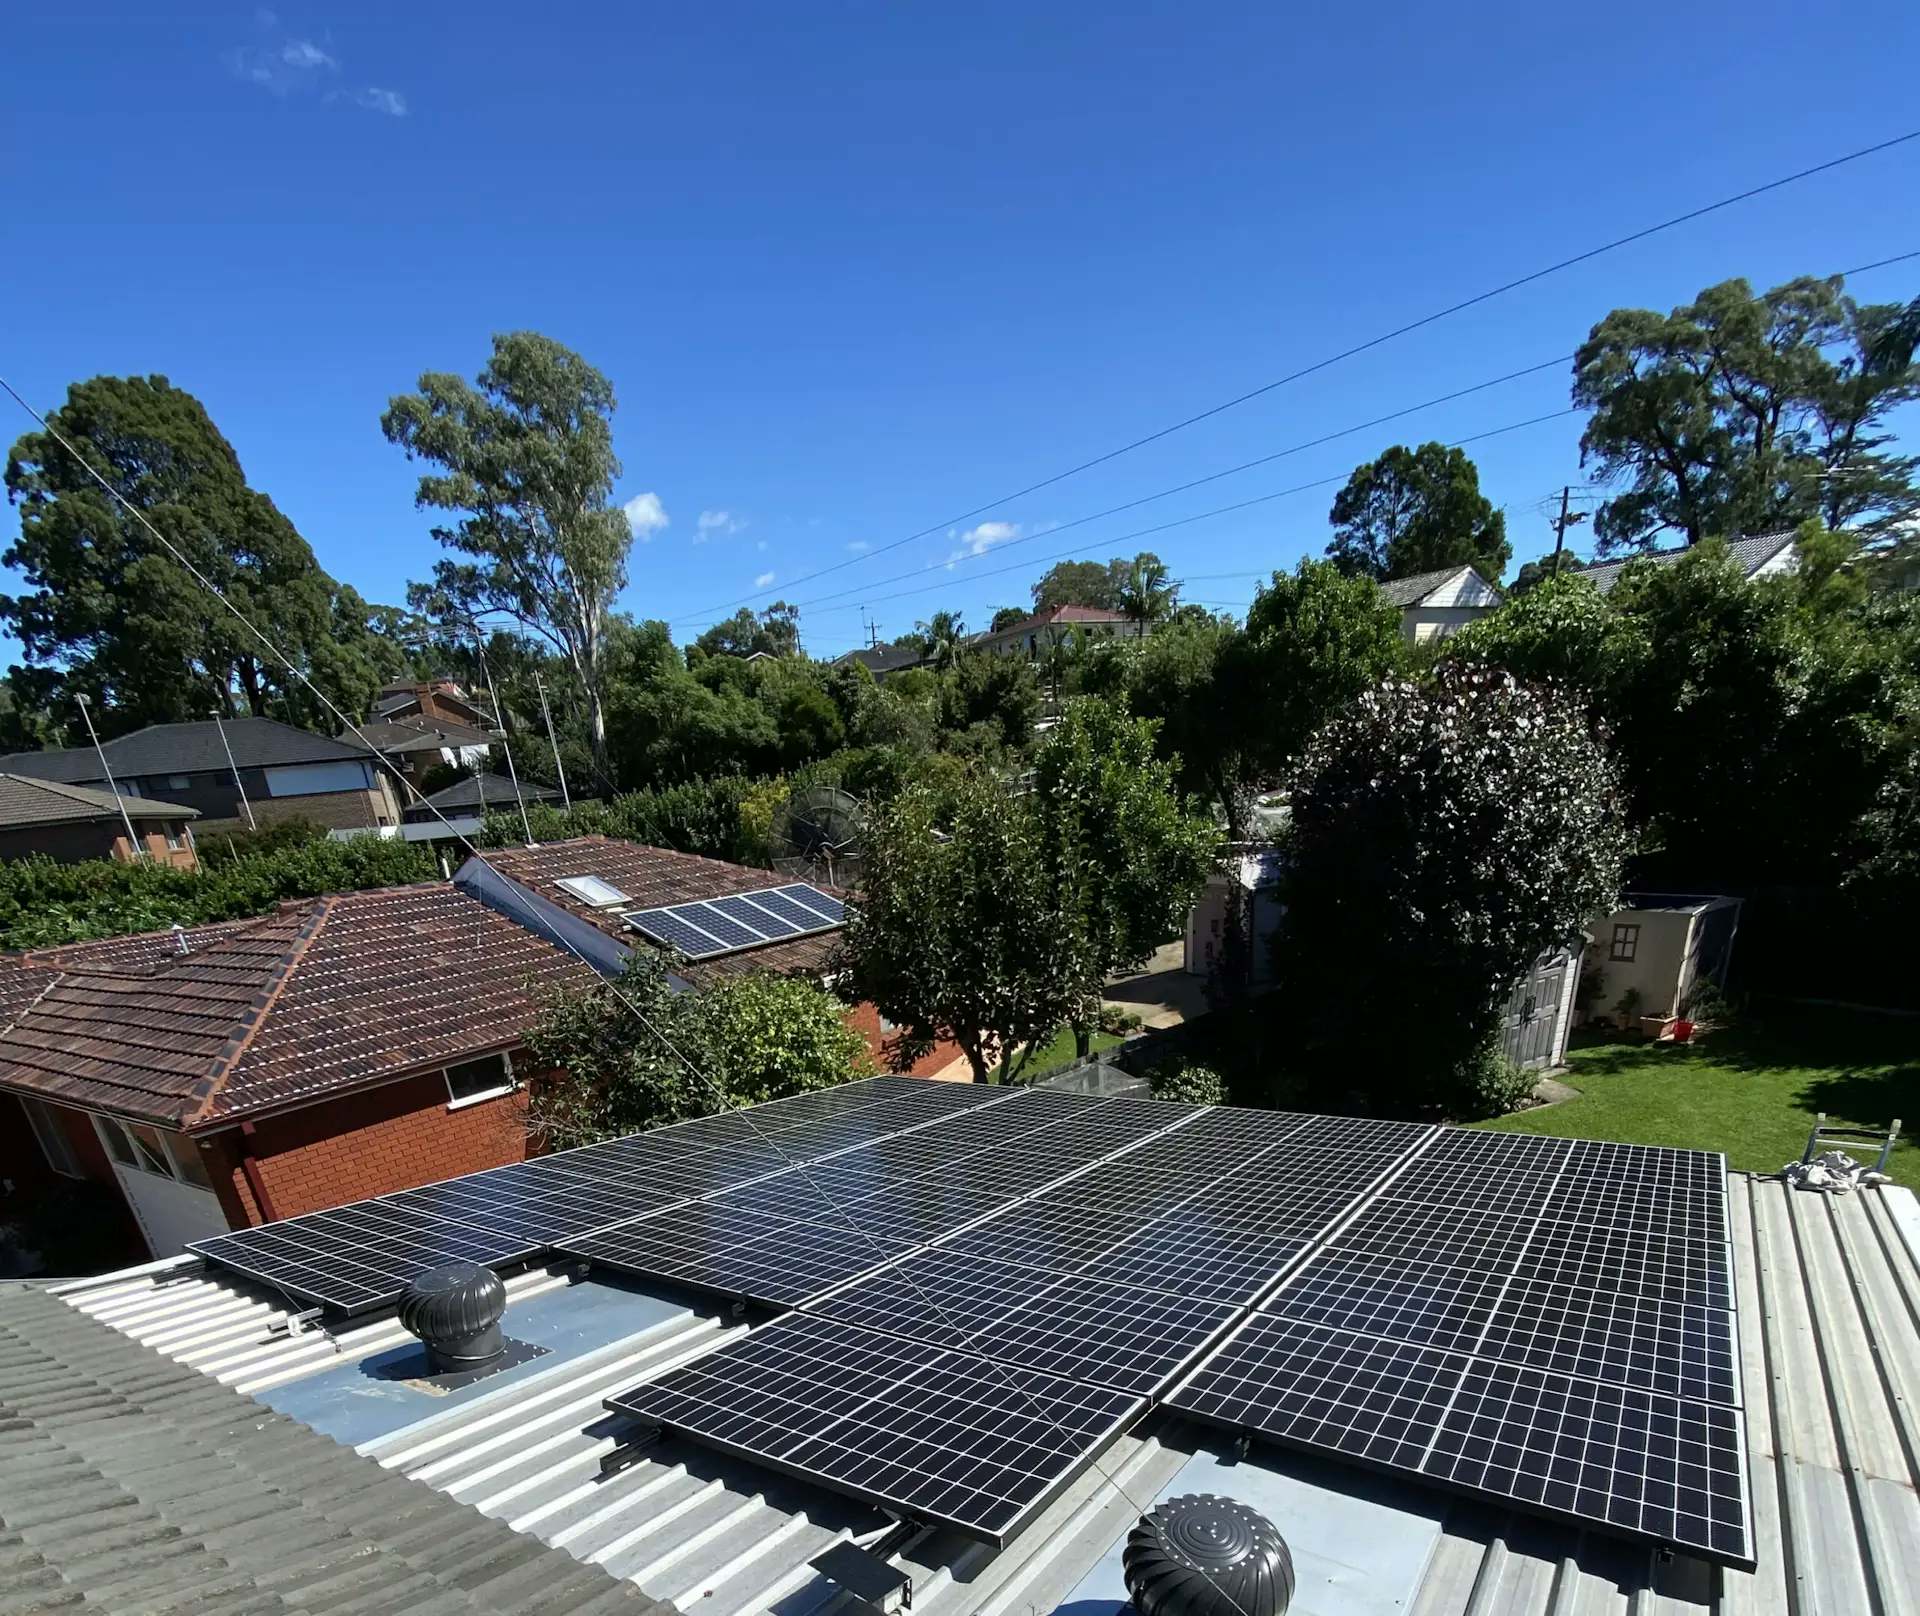 8kW residential solar panel system installation